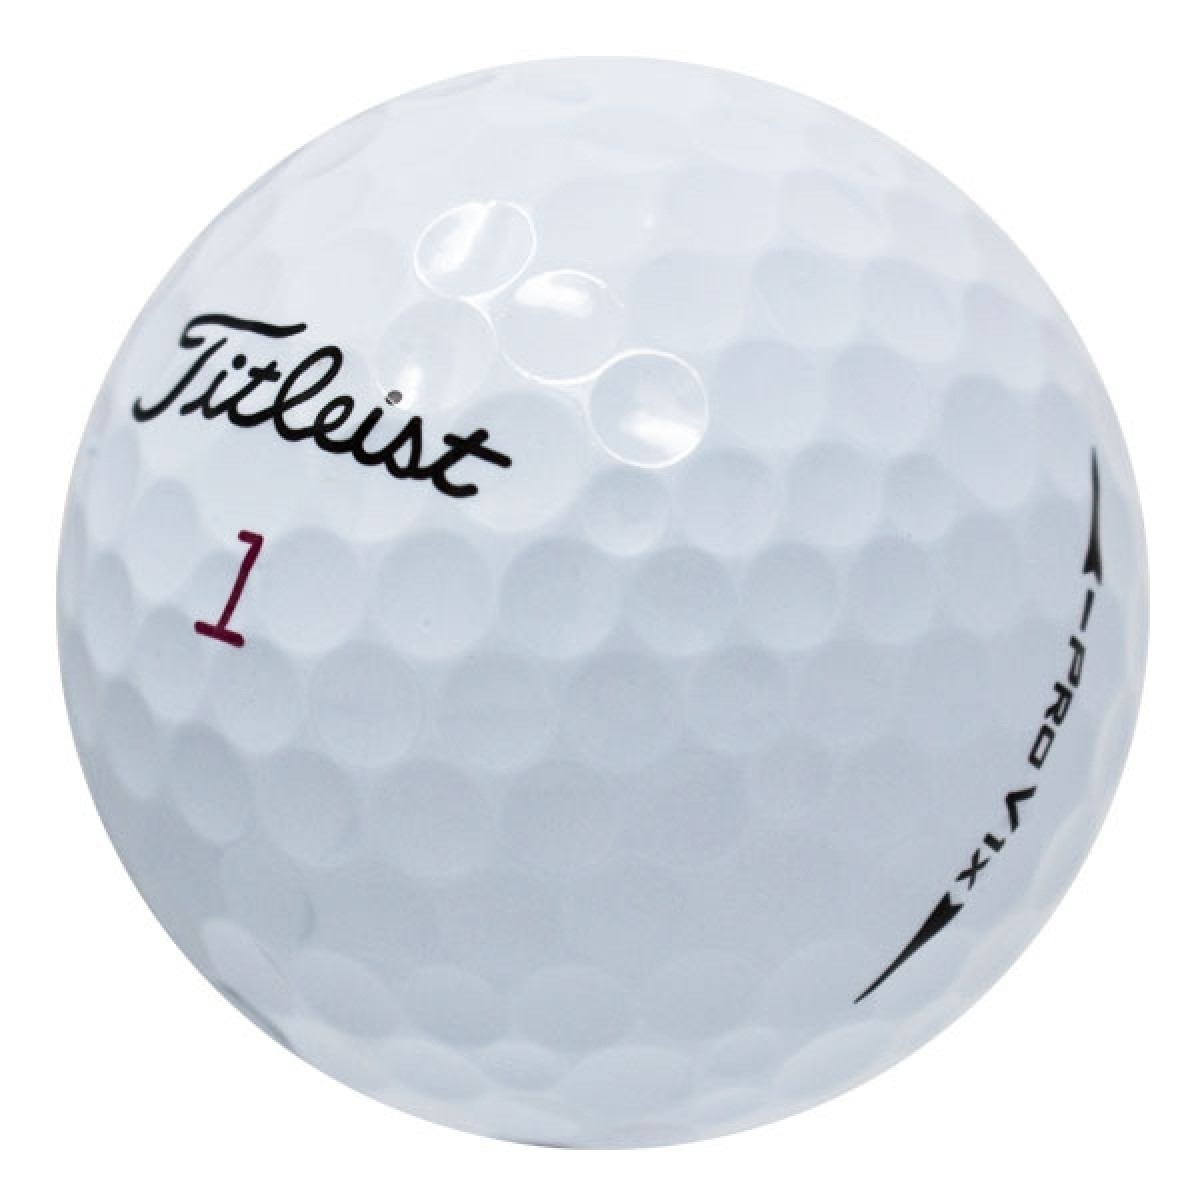 Titleist Pro V 1x 2018 Left Dash Used Golf Balls